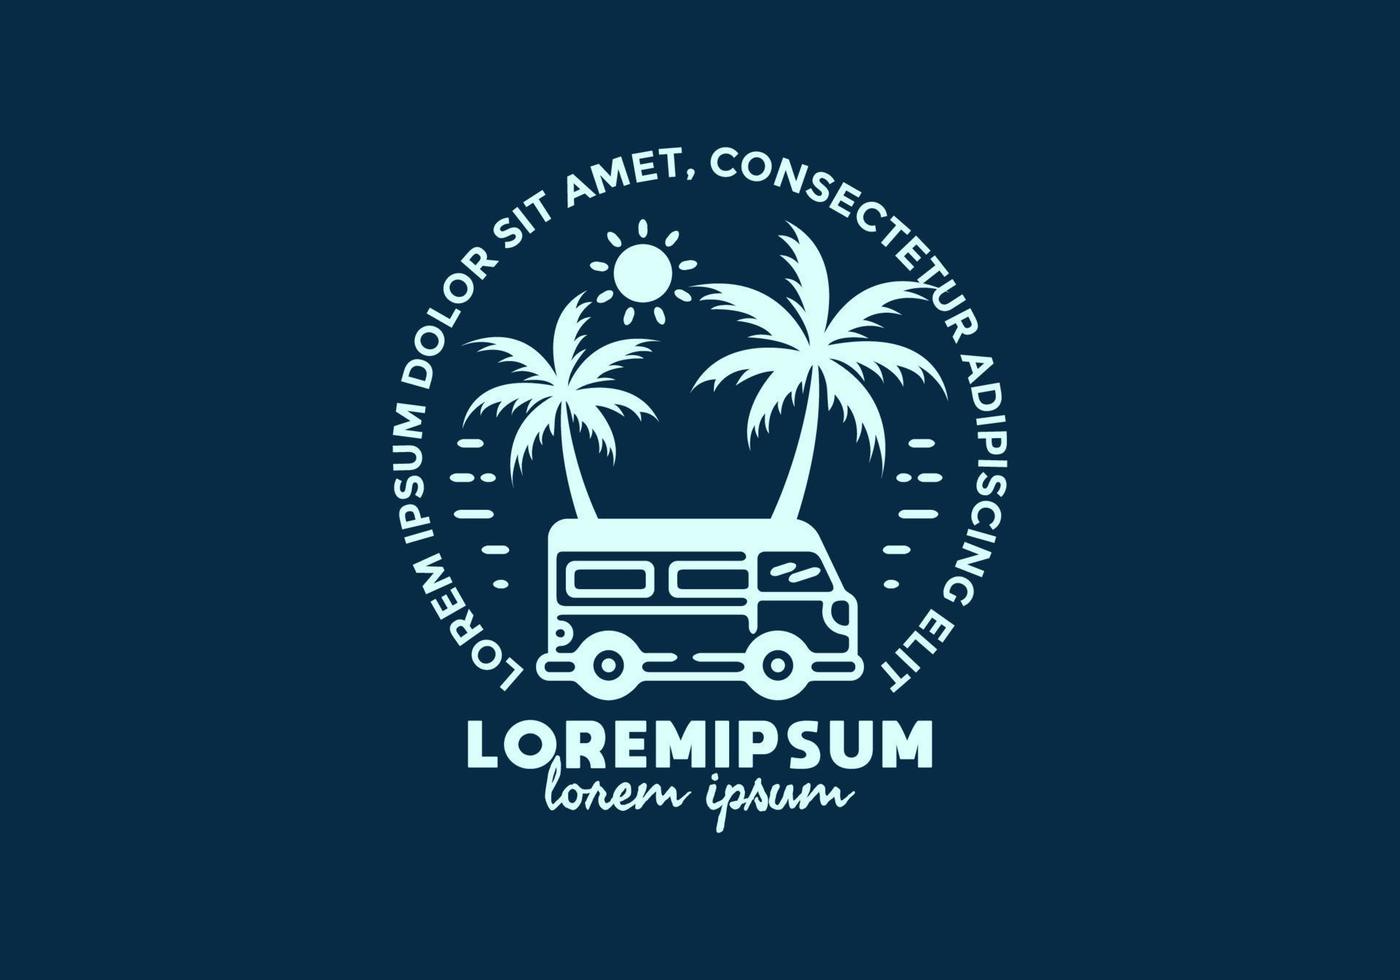 Rv car on the beach linjekonst med lorem ipsum text vektor